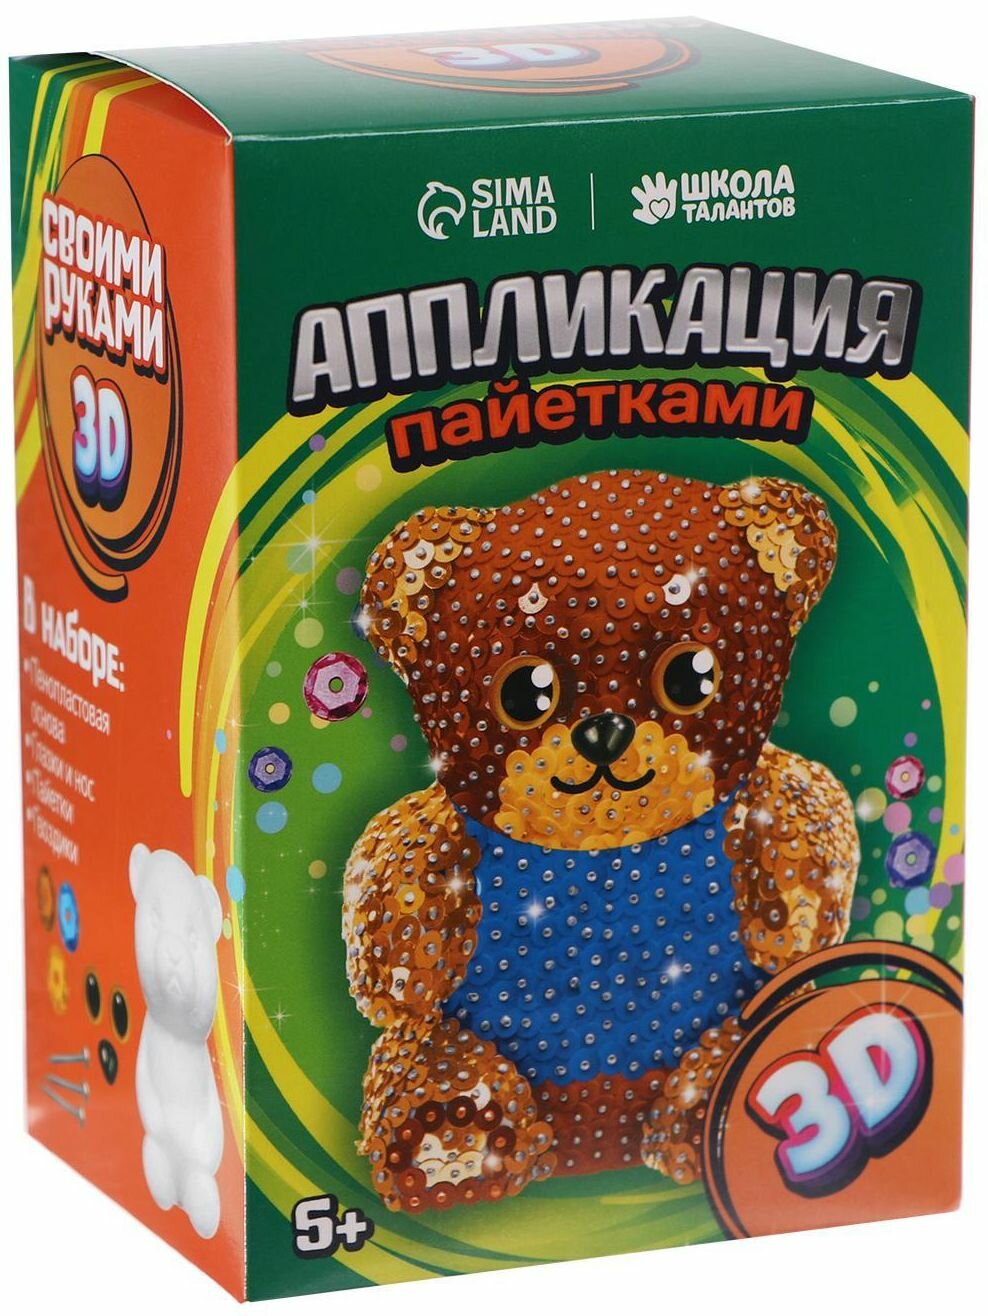 Набор для детского творчества "Мишка", аппликация из пайеток, игрушка в технике 3D-мозаики, 13,7 х 9,3 х 7,8 см + 3 цвета пайеток